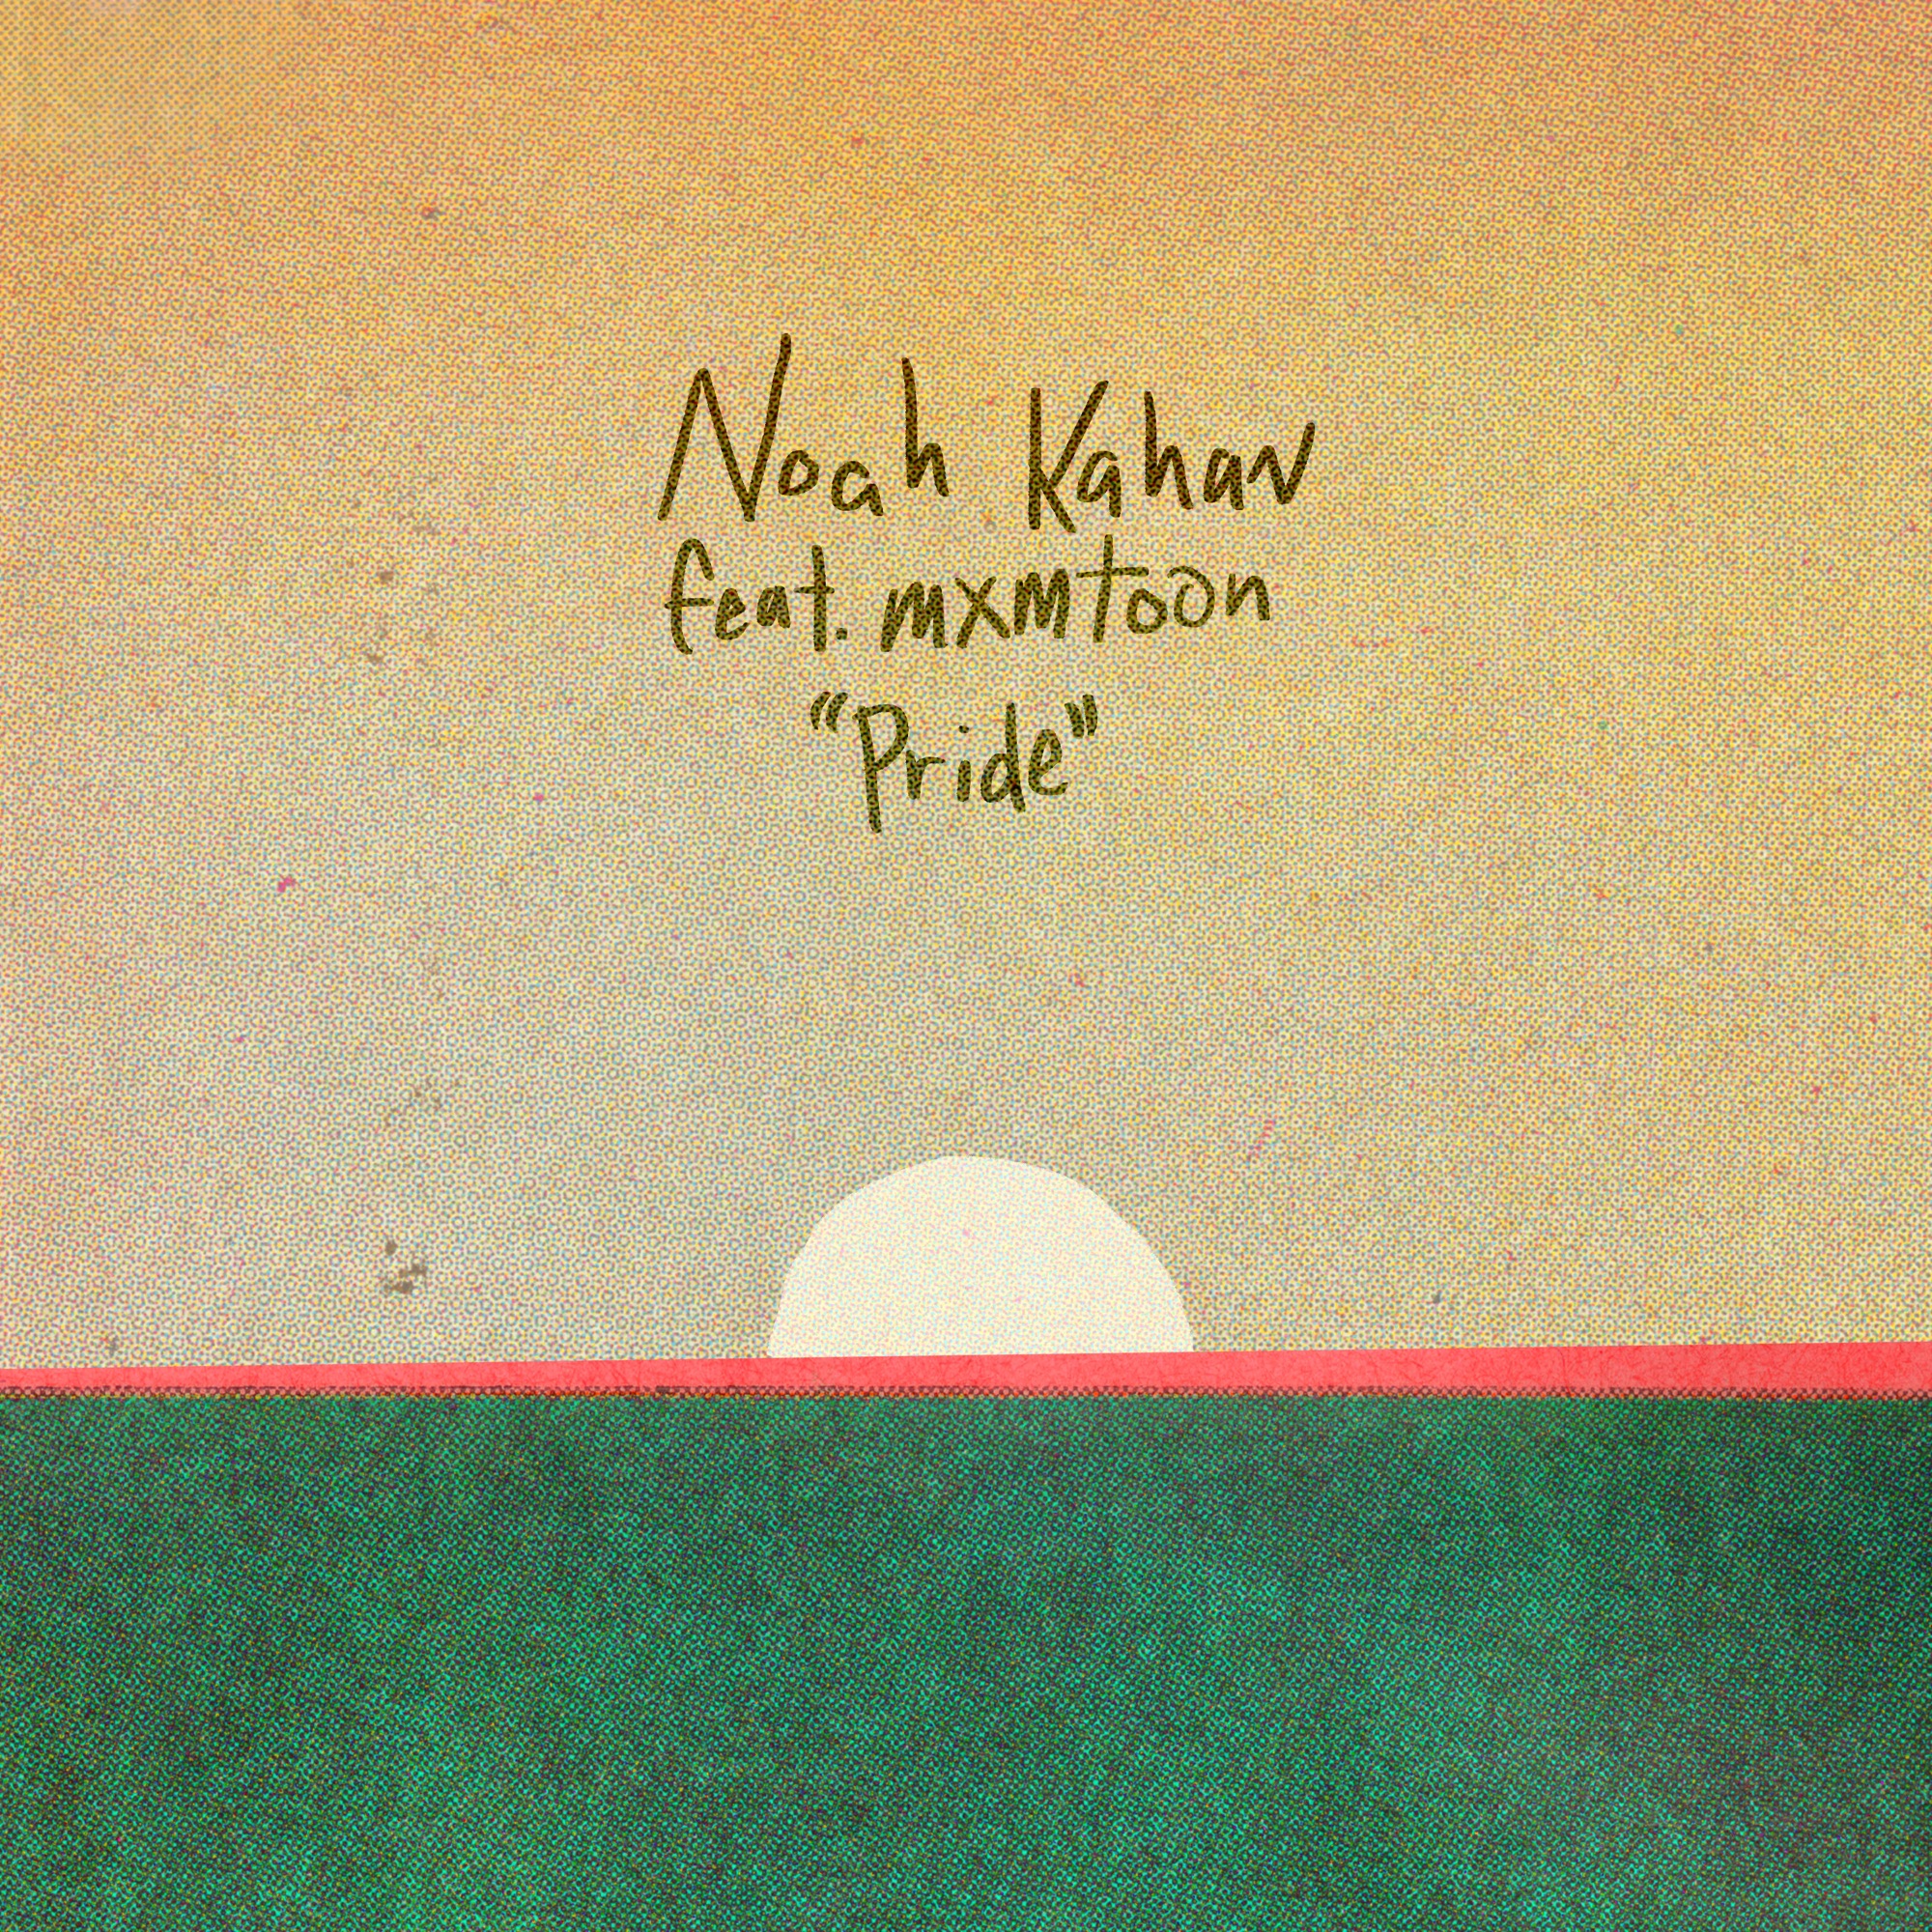 Noah Kahan - Pride (feat. mxmtoon) - Single